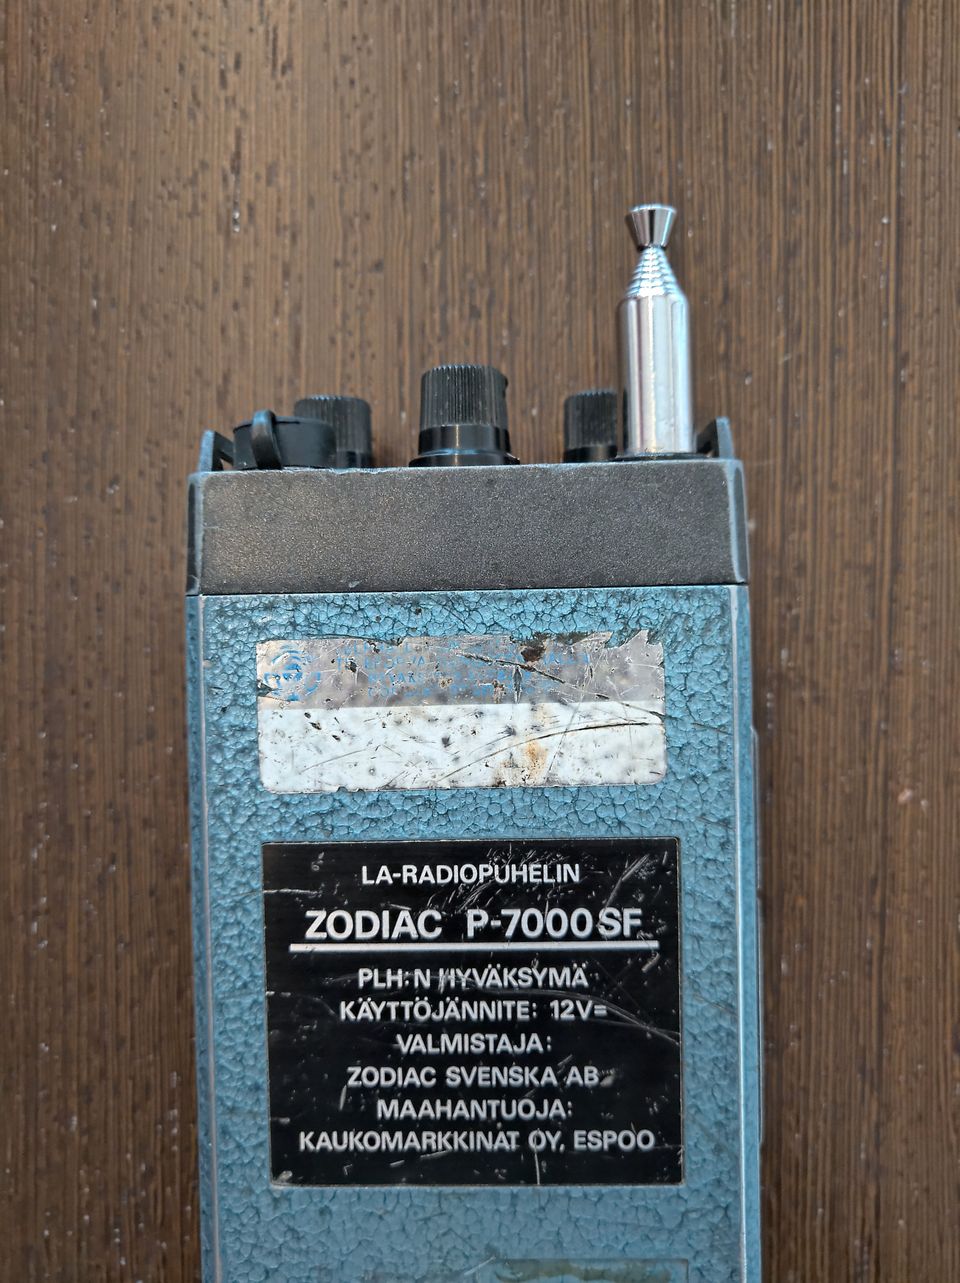 LA-radiopuhelin Zodiac P-7000SF